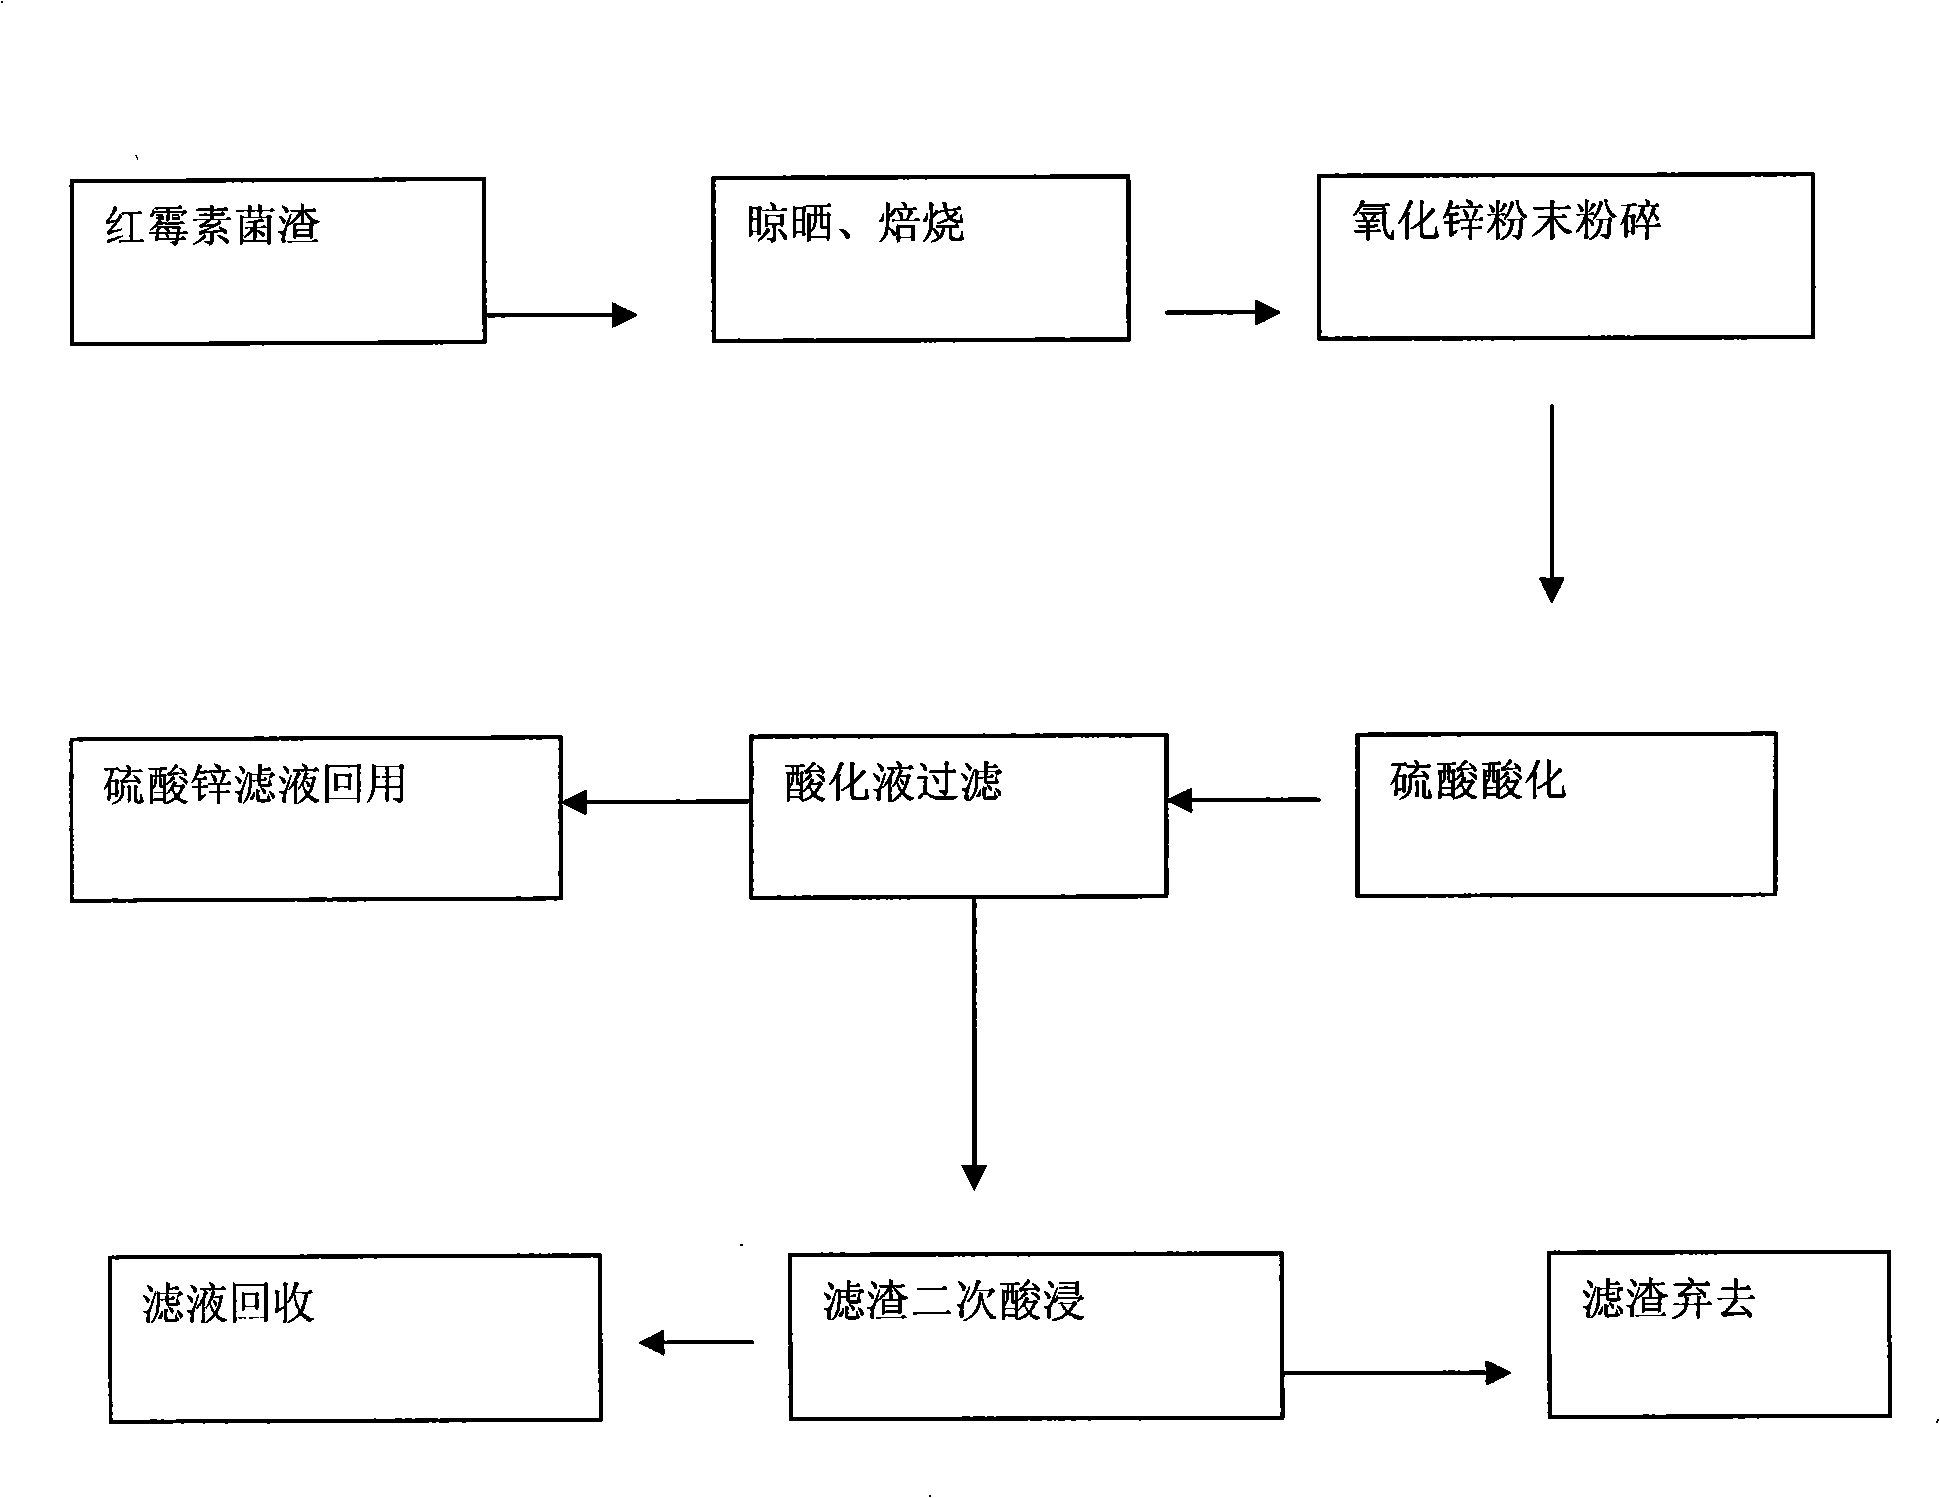 Method for producing abomacetin rhodanate